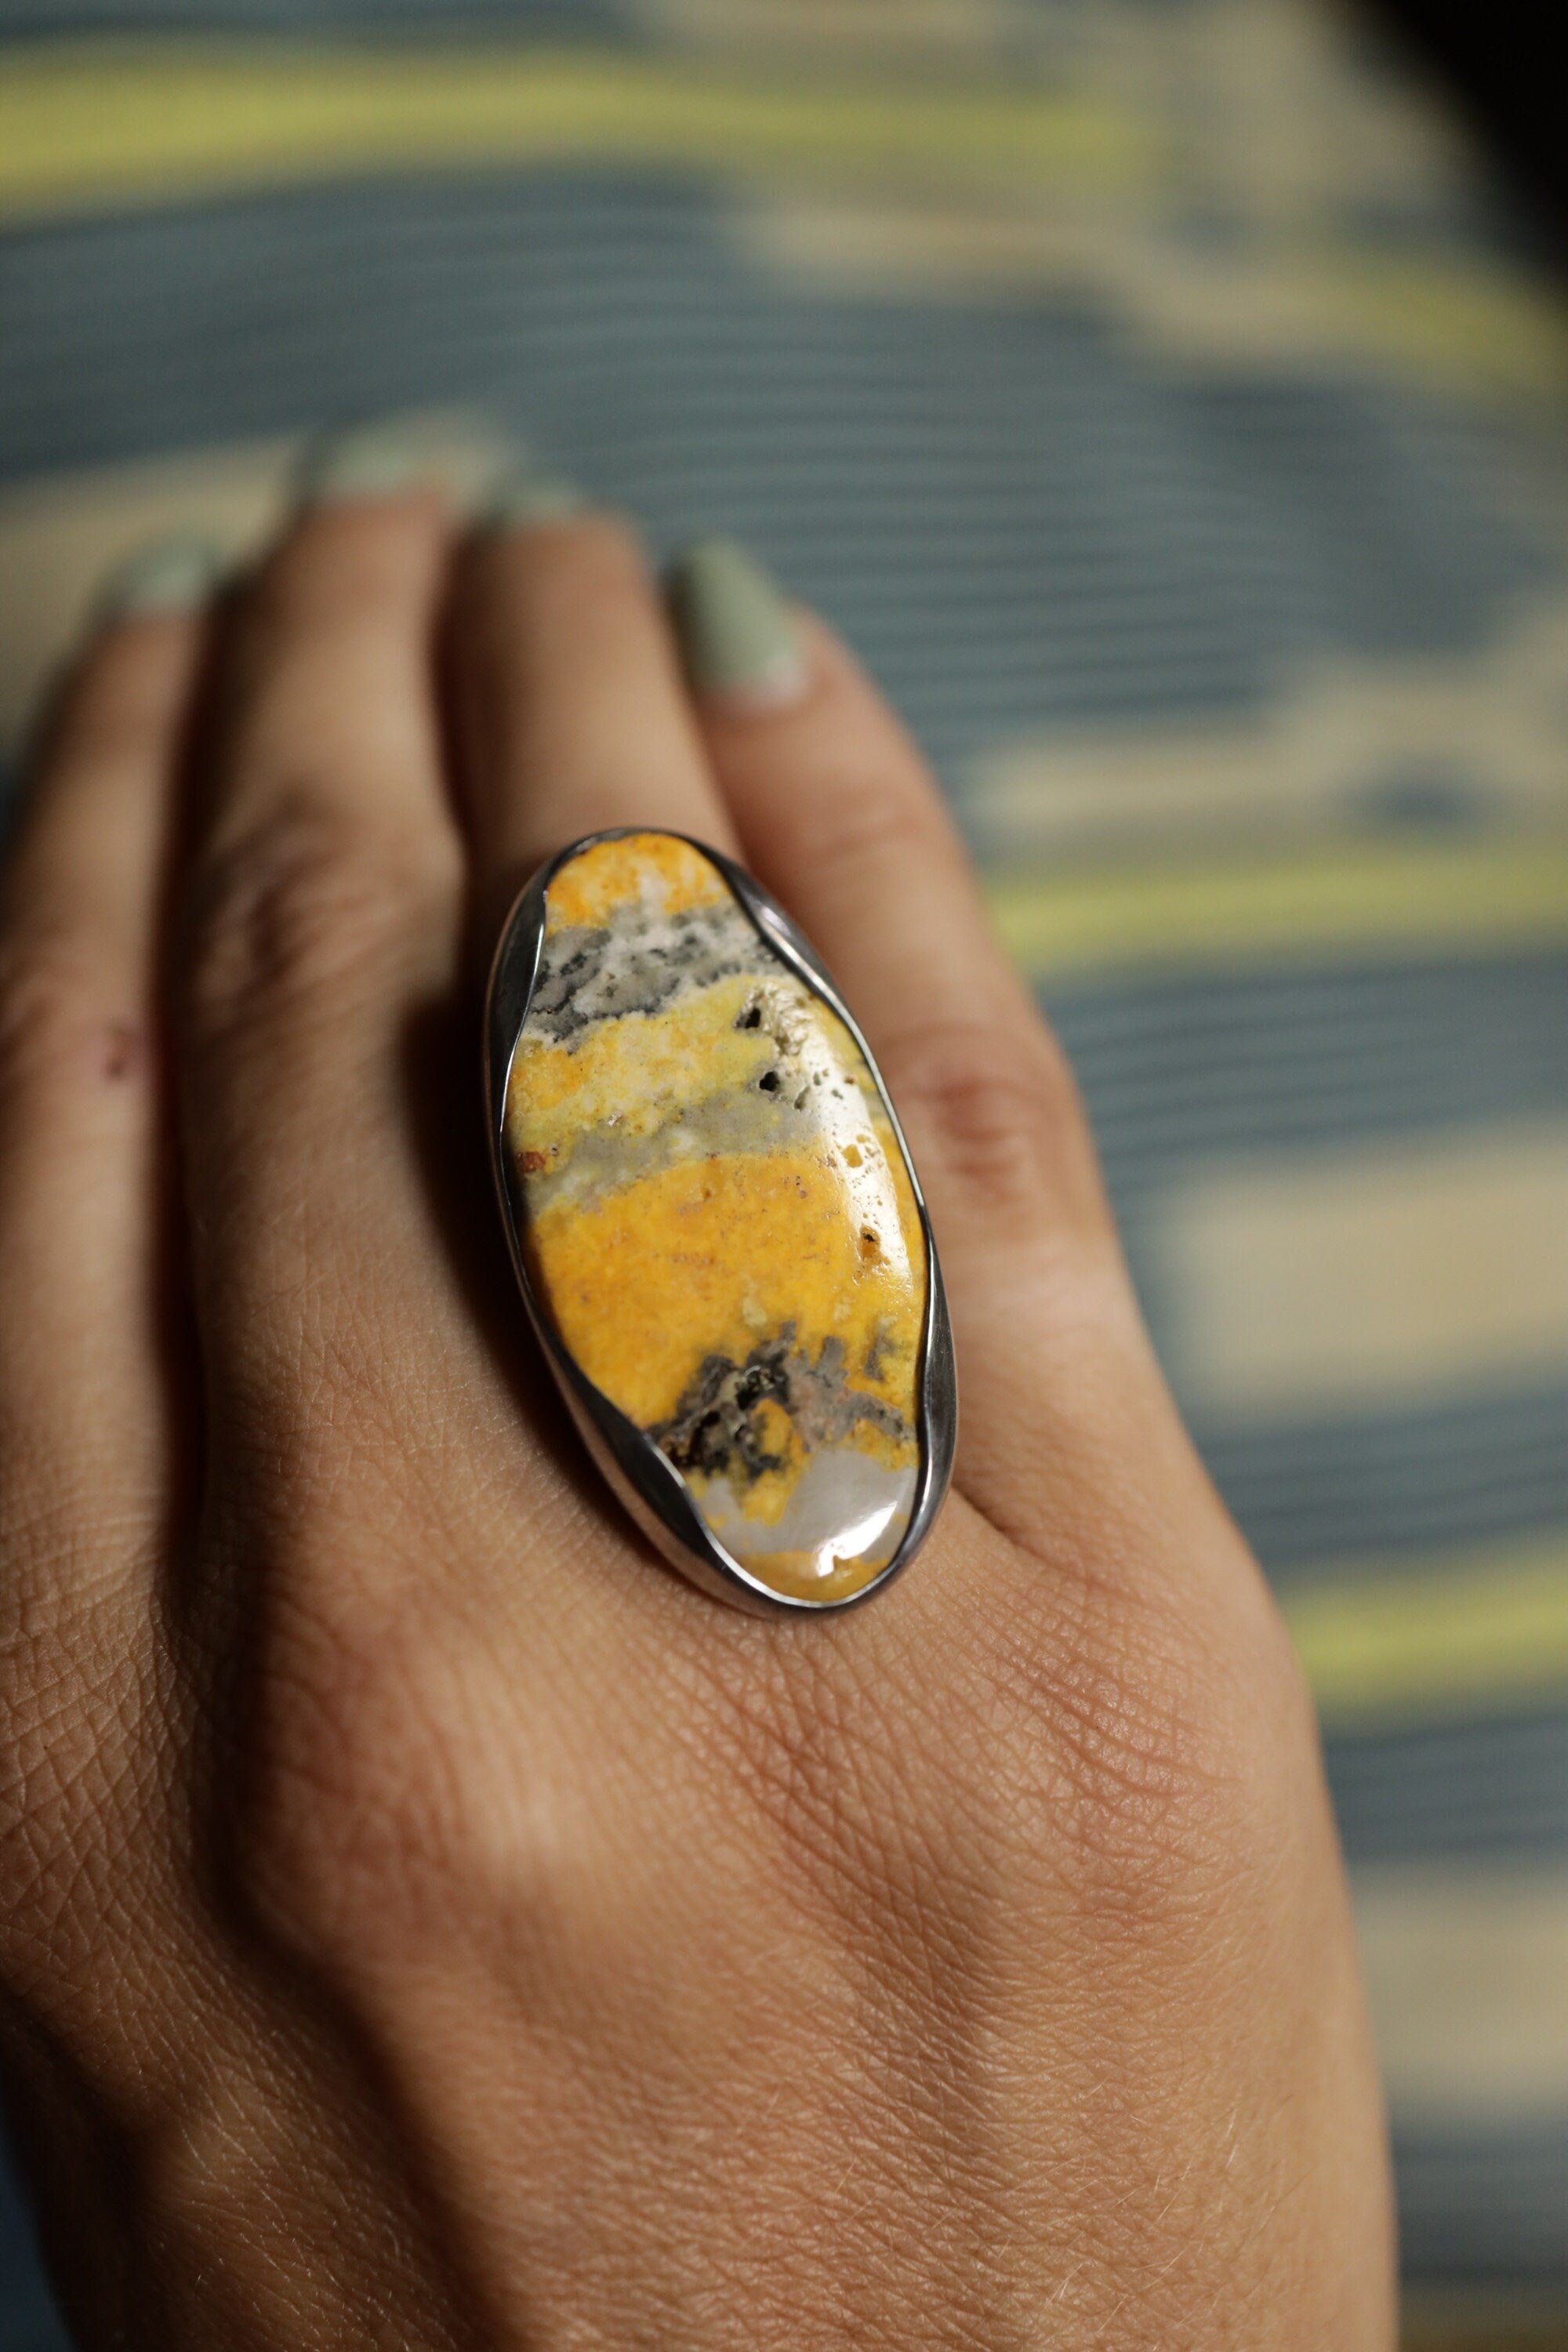 Sunburst Splendor: Adjustable Sterling Silver Ring with Bumble Bee Jasper - Unisex - Size 5-12 US